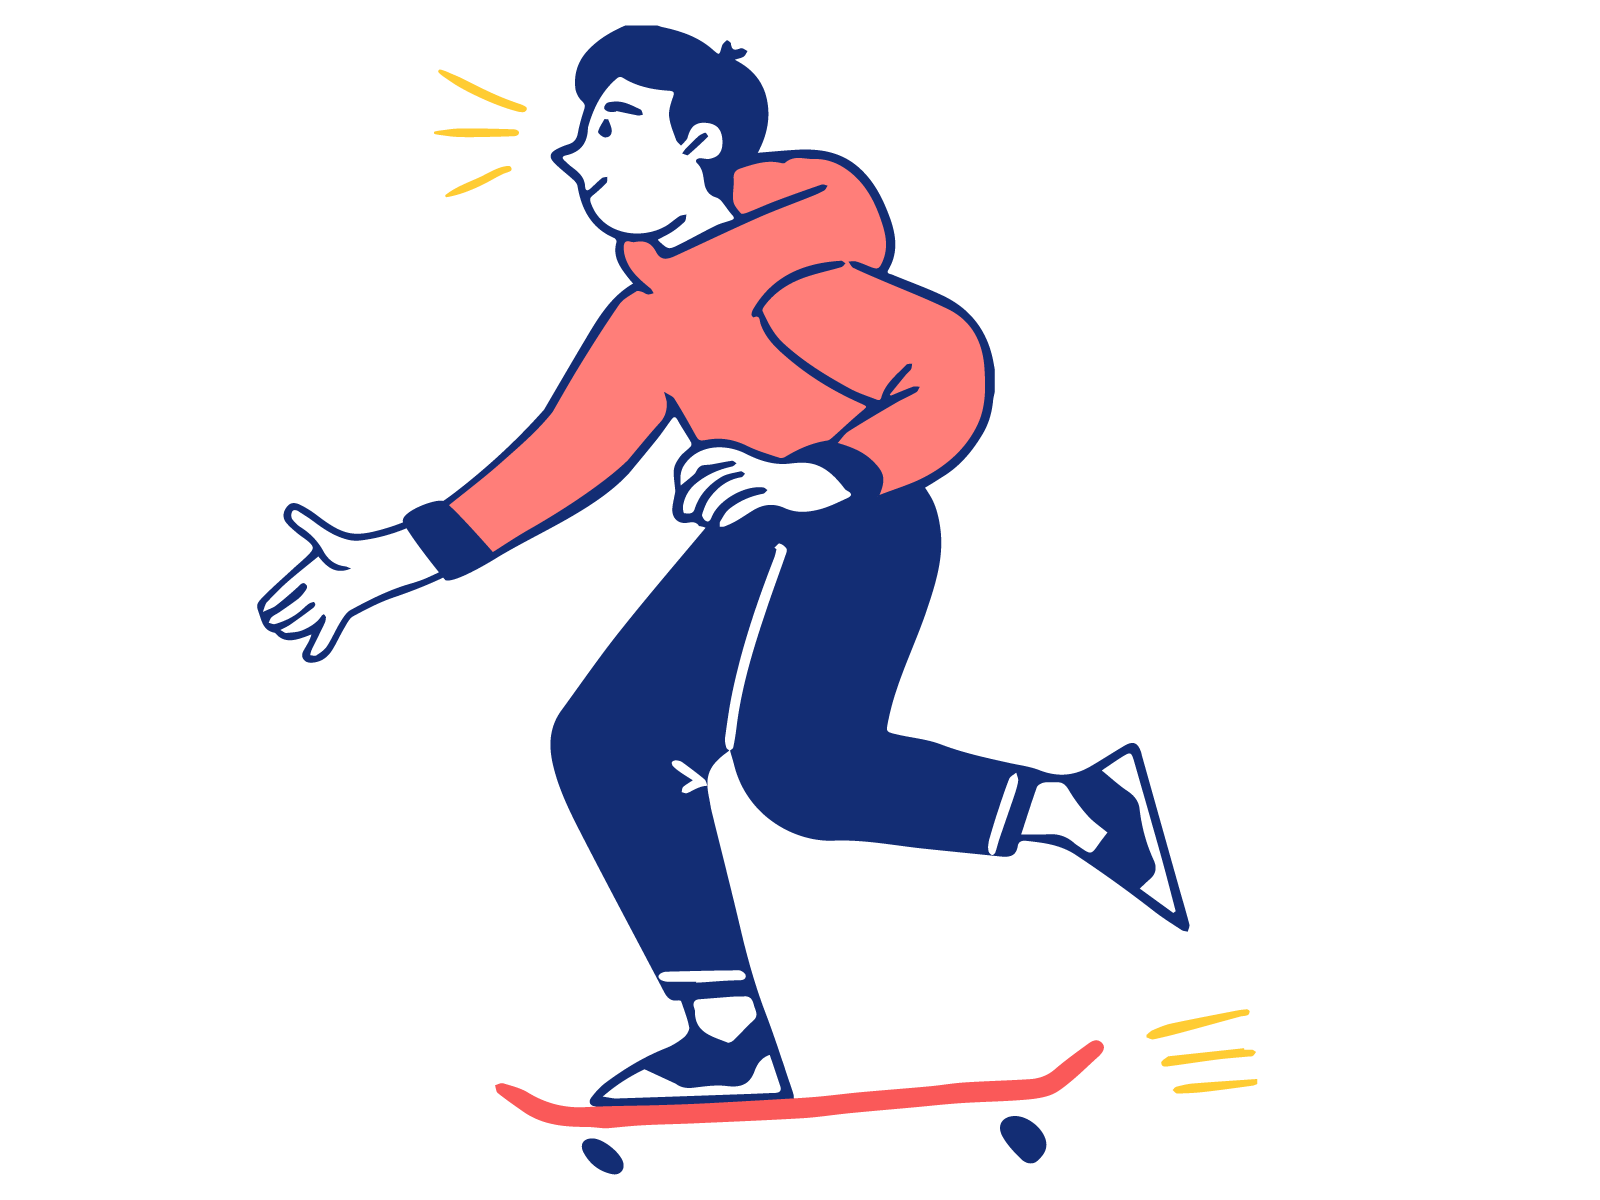 Crunchtime illustration of a man on a skateboard